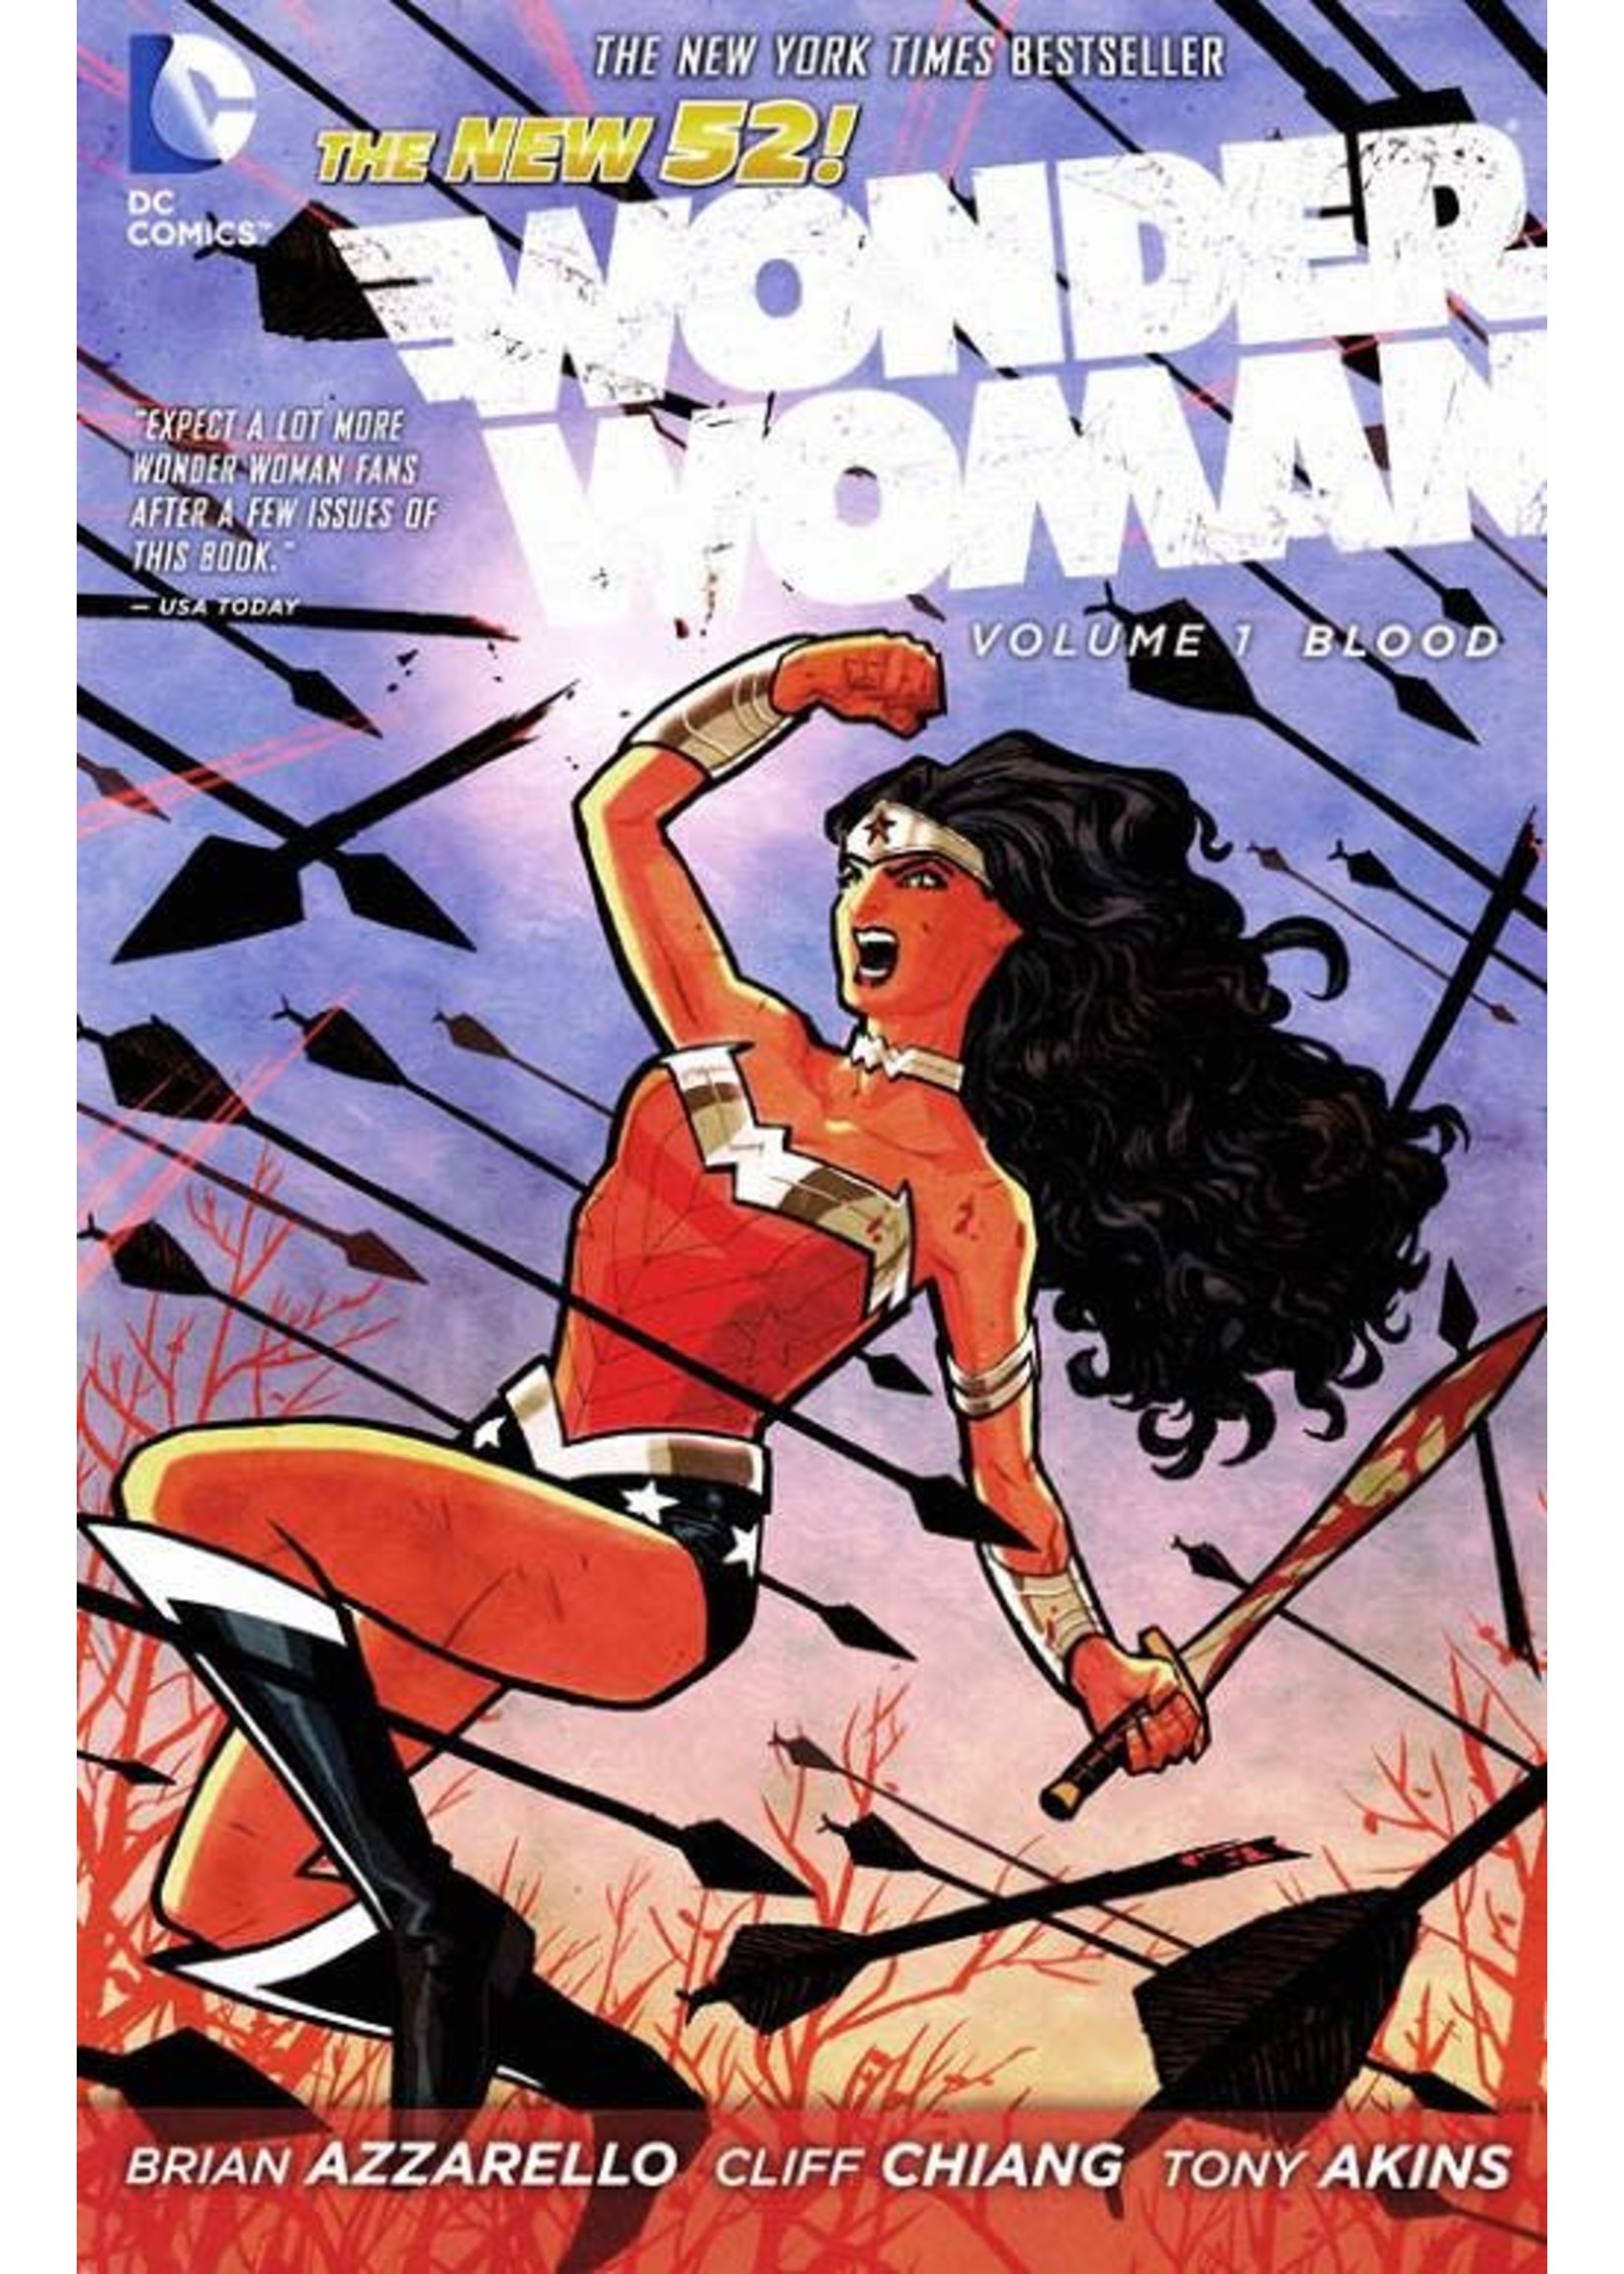 DC COMICS WONDER WOMAN VOL 1 BLOOD (THE NEW 52)